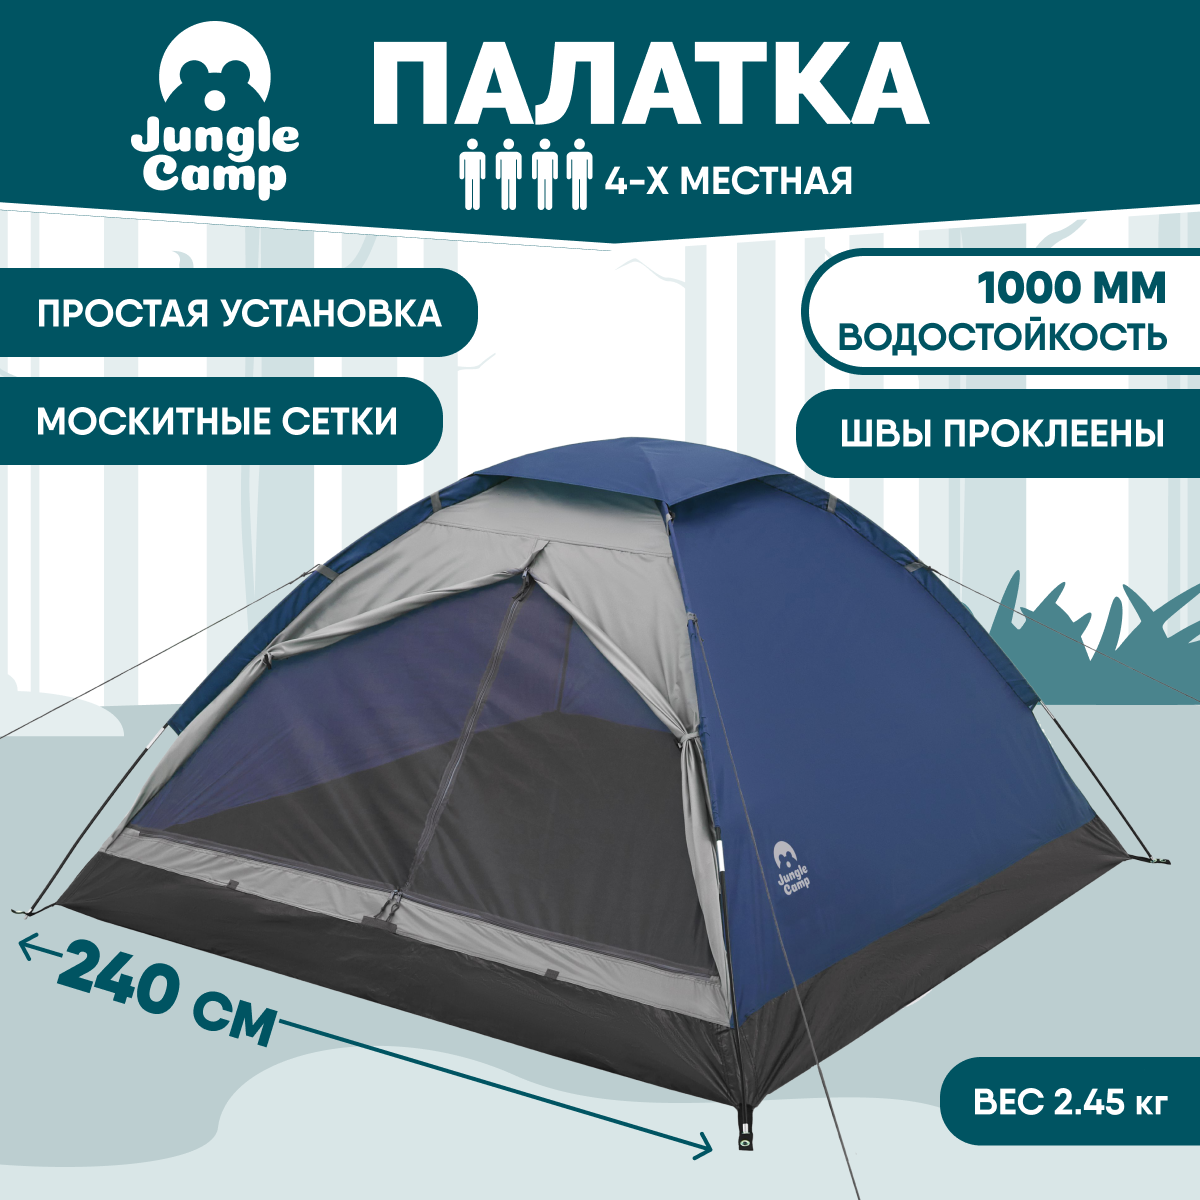 Палатка четырёхместная JUNGLE CAMP Lite Dome 4, цвет: синий/серый